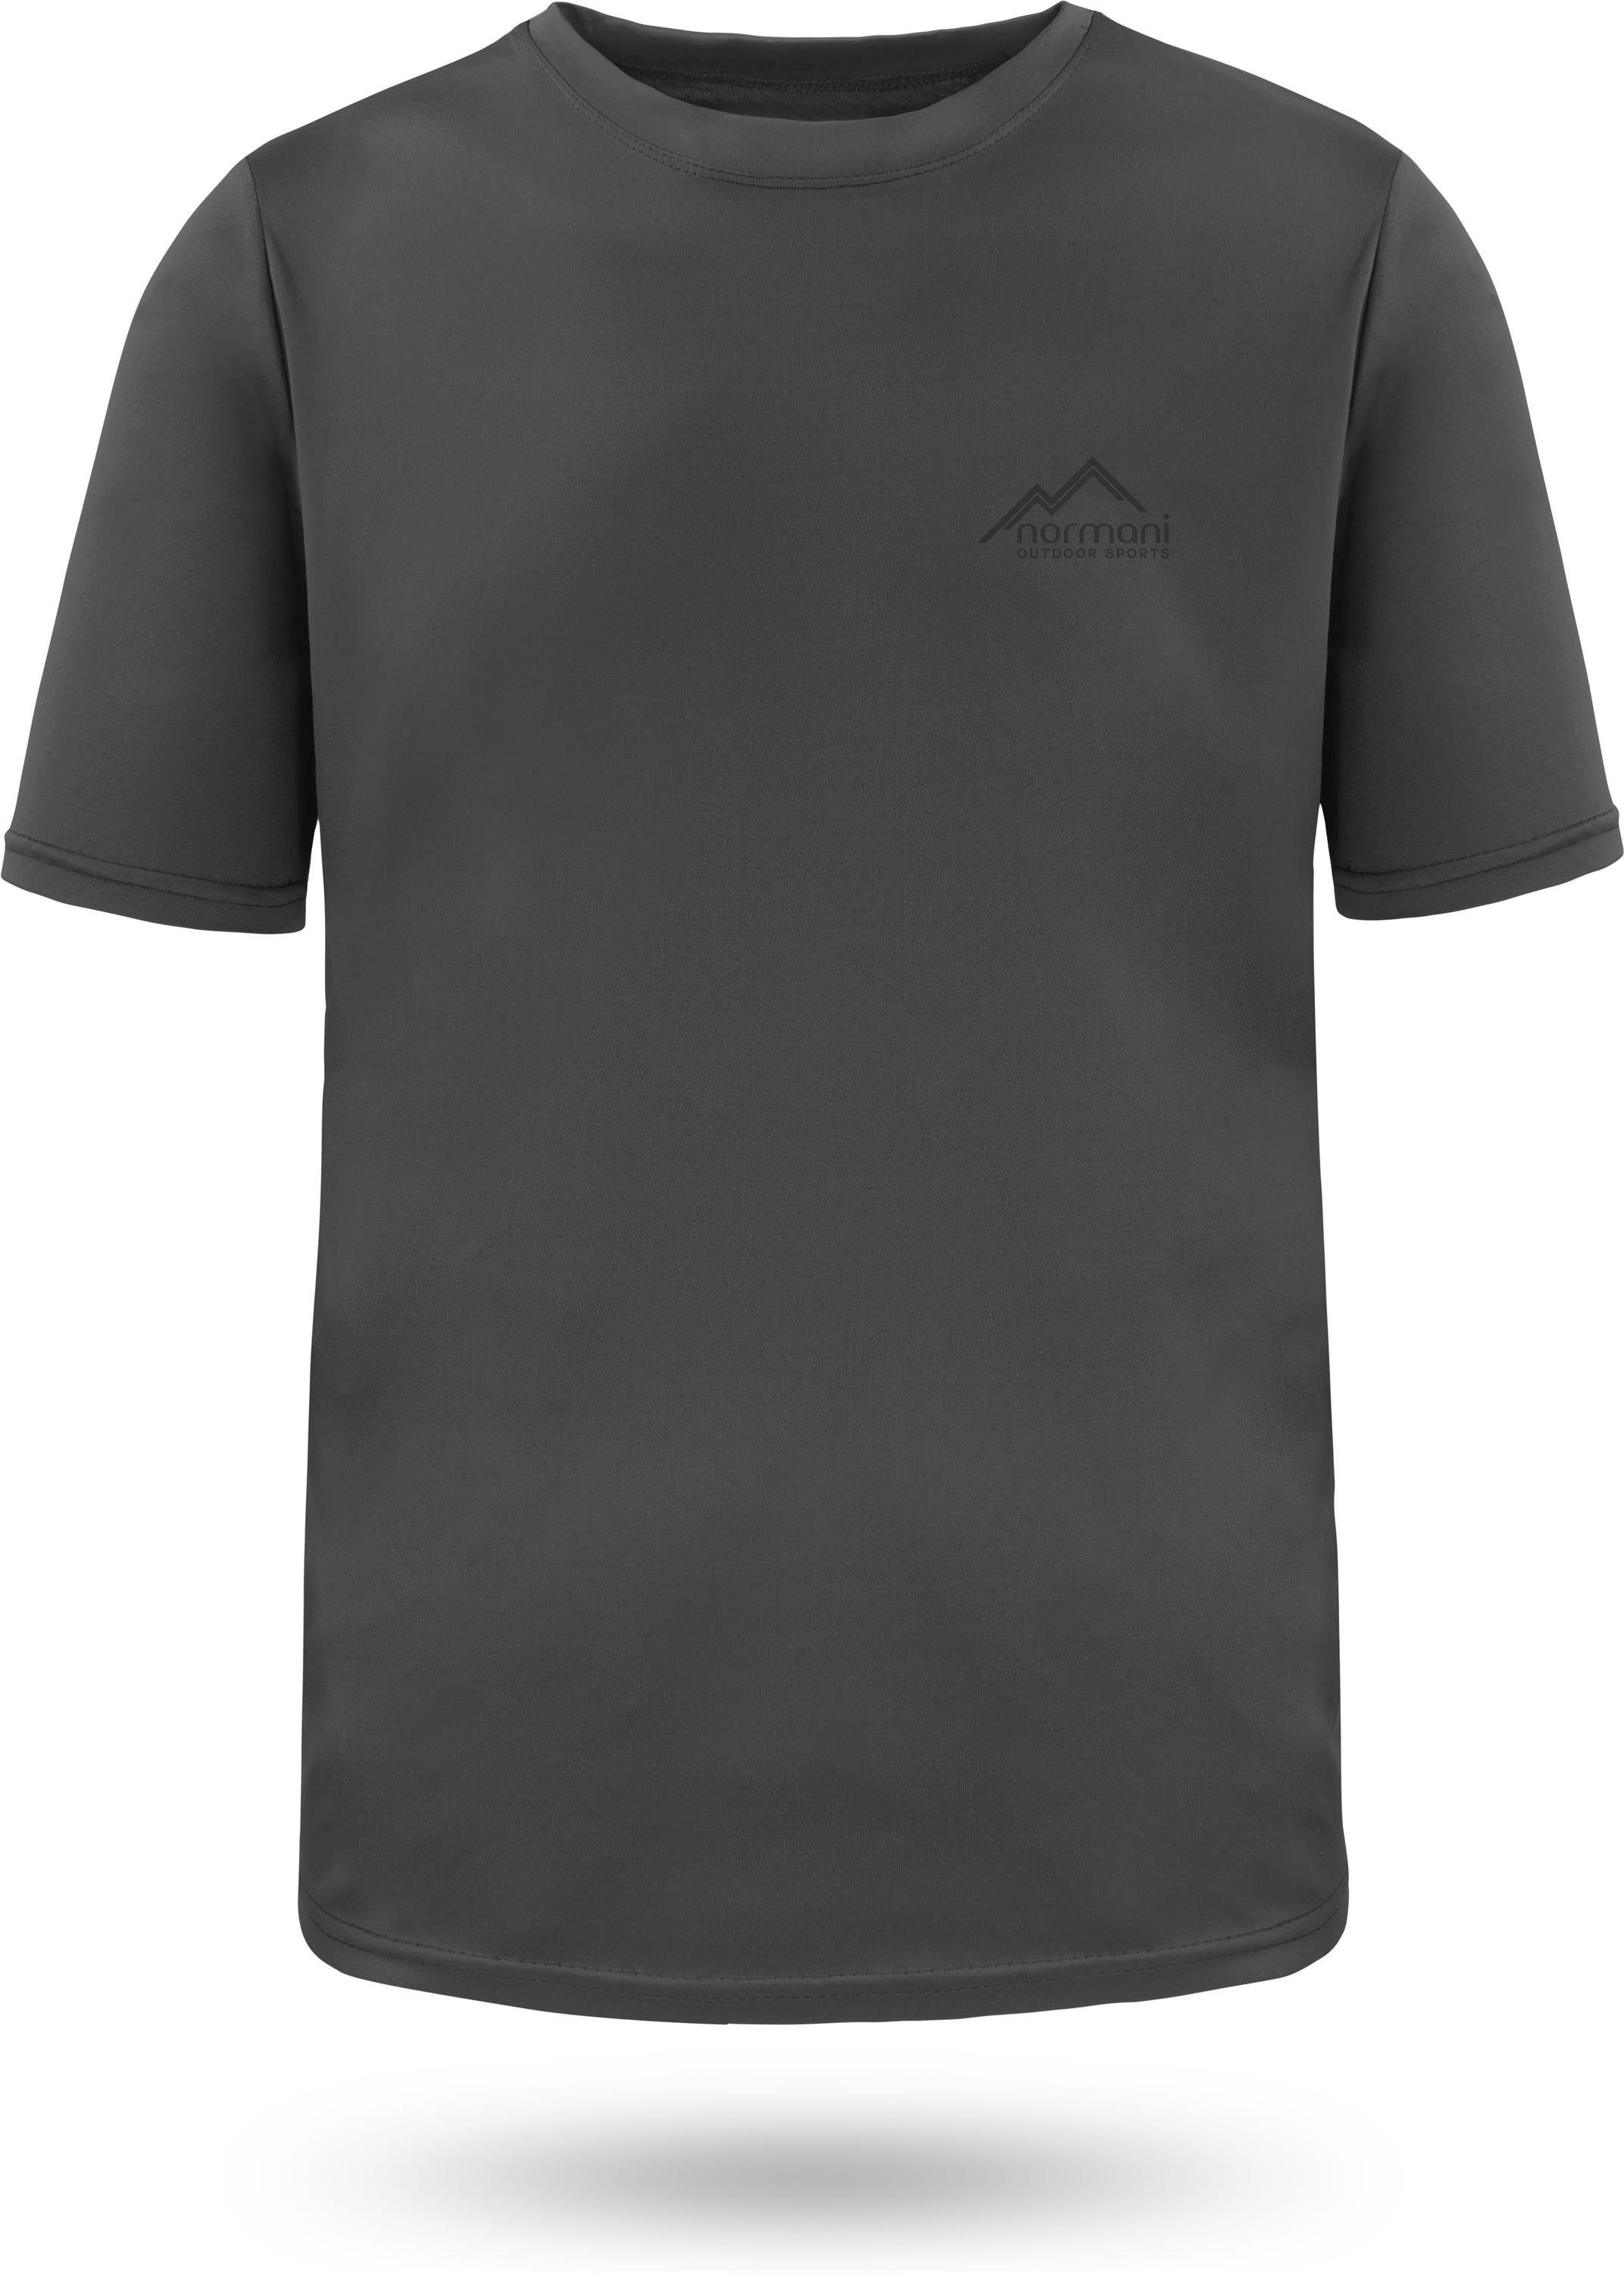 normani Funktionsshirt Herren T-Shirt Agra Kurzarm Sportswear Funktions-Sport Fitness Shirt mt Cooling-Material Grau